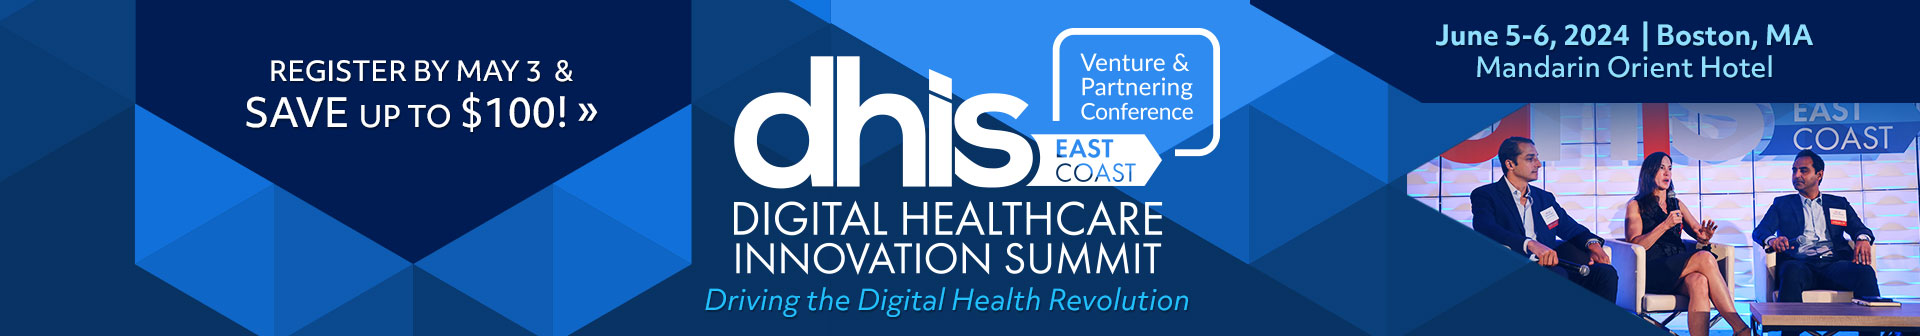 Digital healthcare East